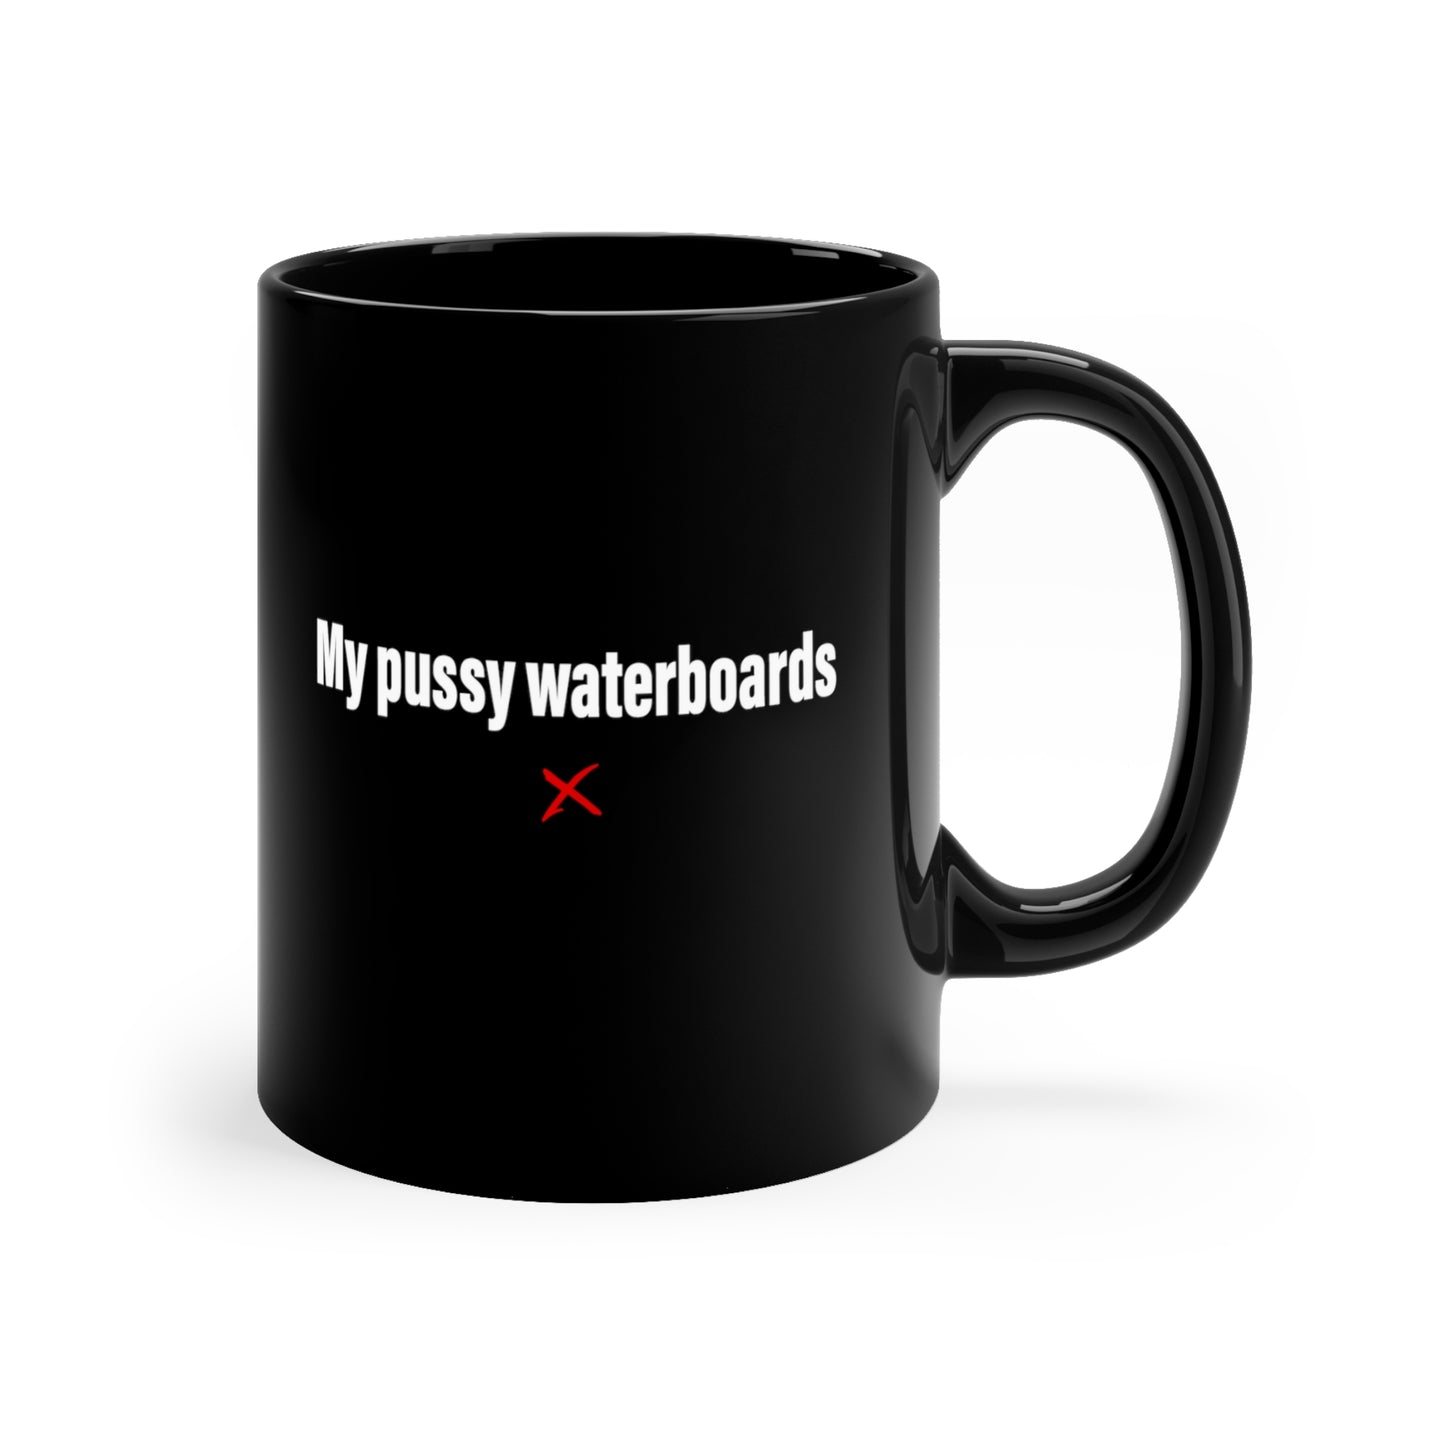 My pussy waterboards - Mug